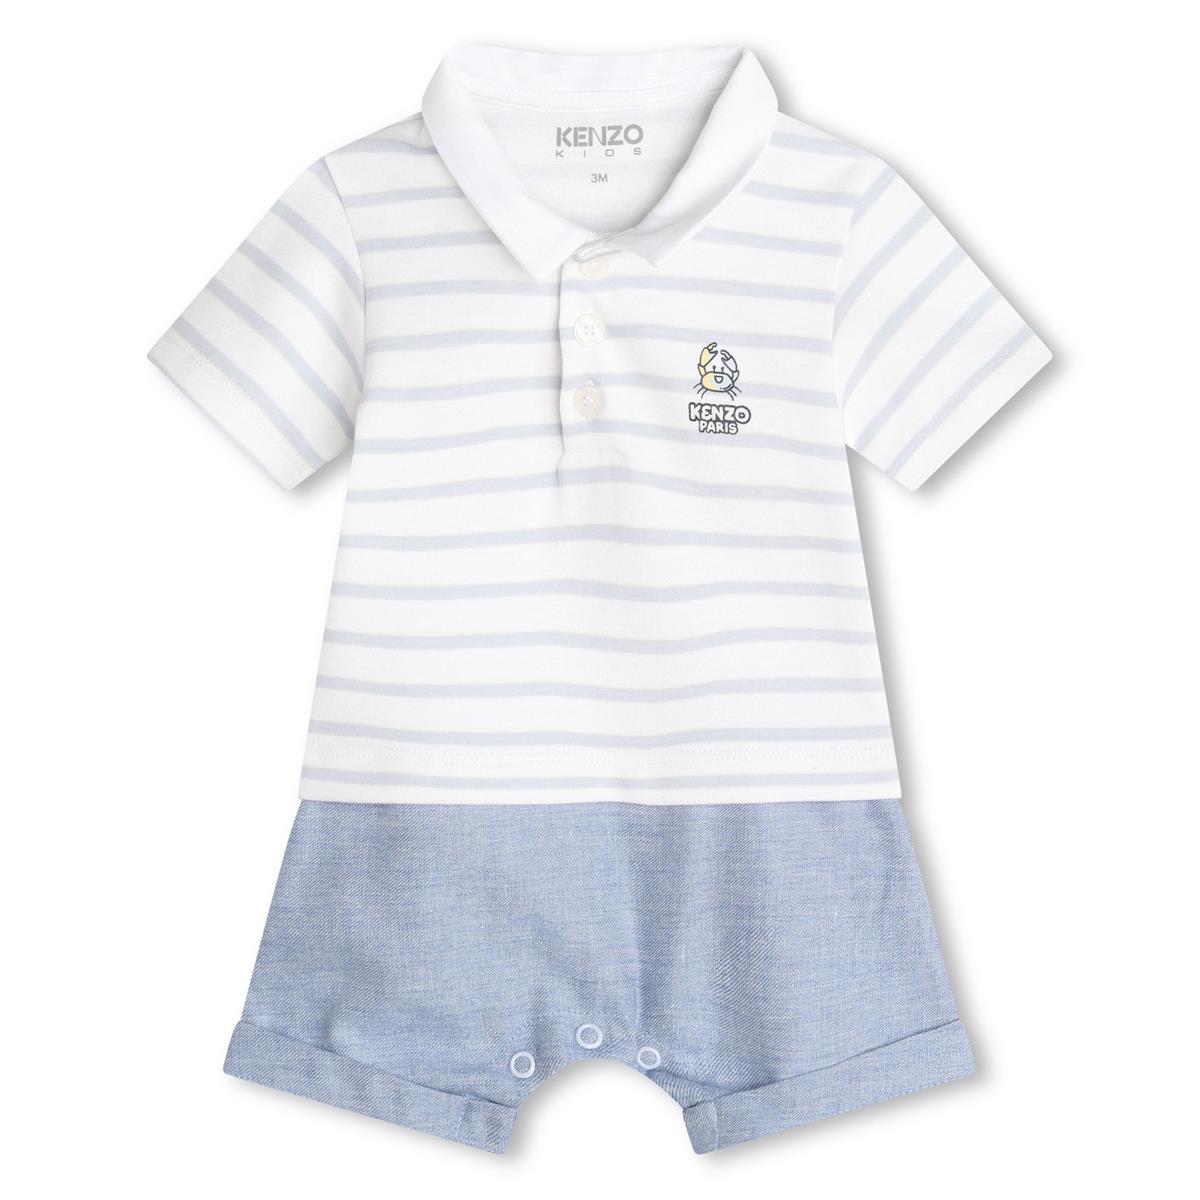 Baby Boys White Stripes Cotton Babysuit